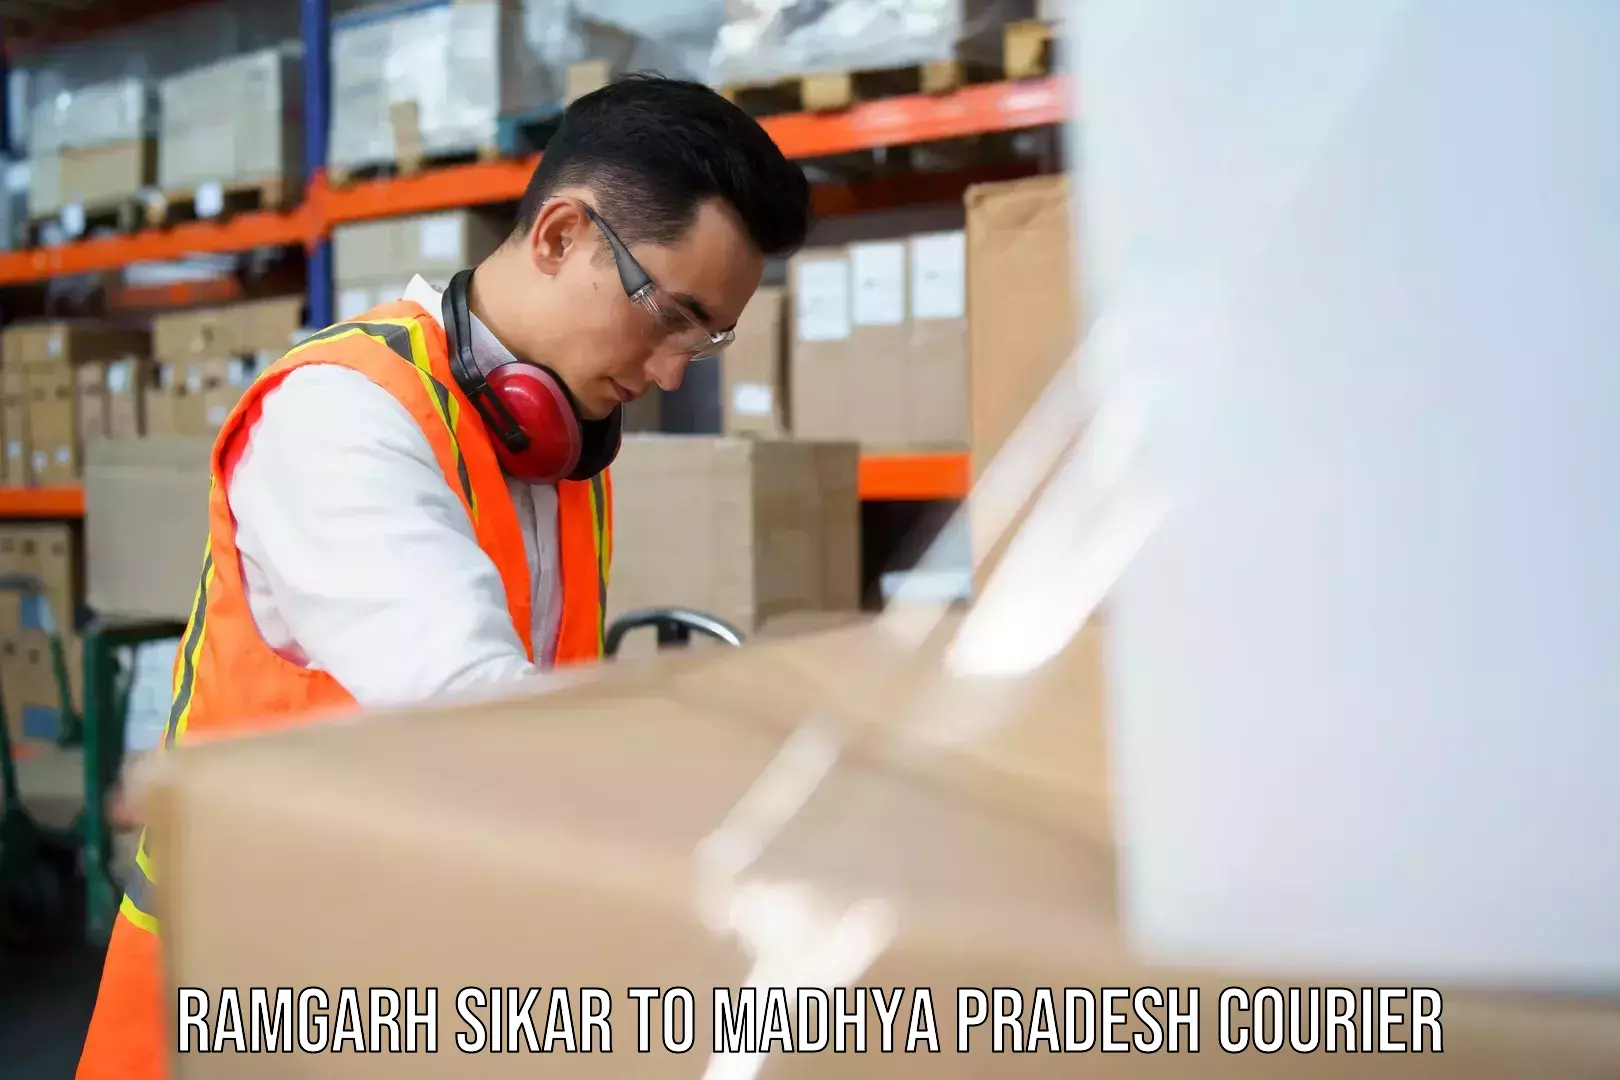 Smart logistics solutions Ramgarh Sikar to Amarwara